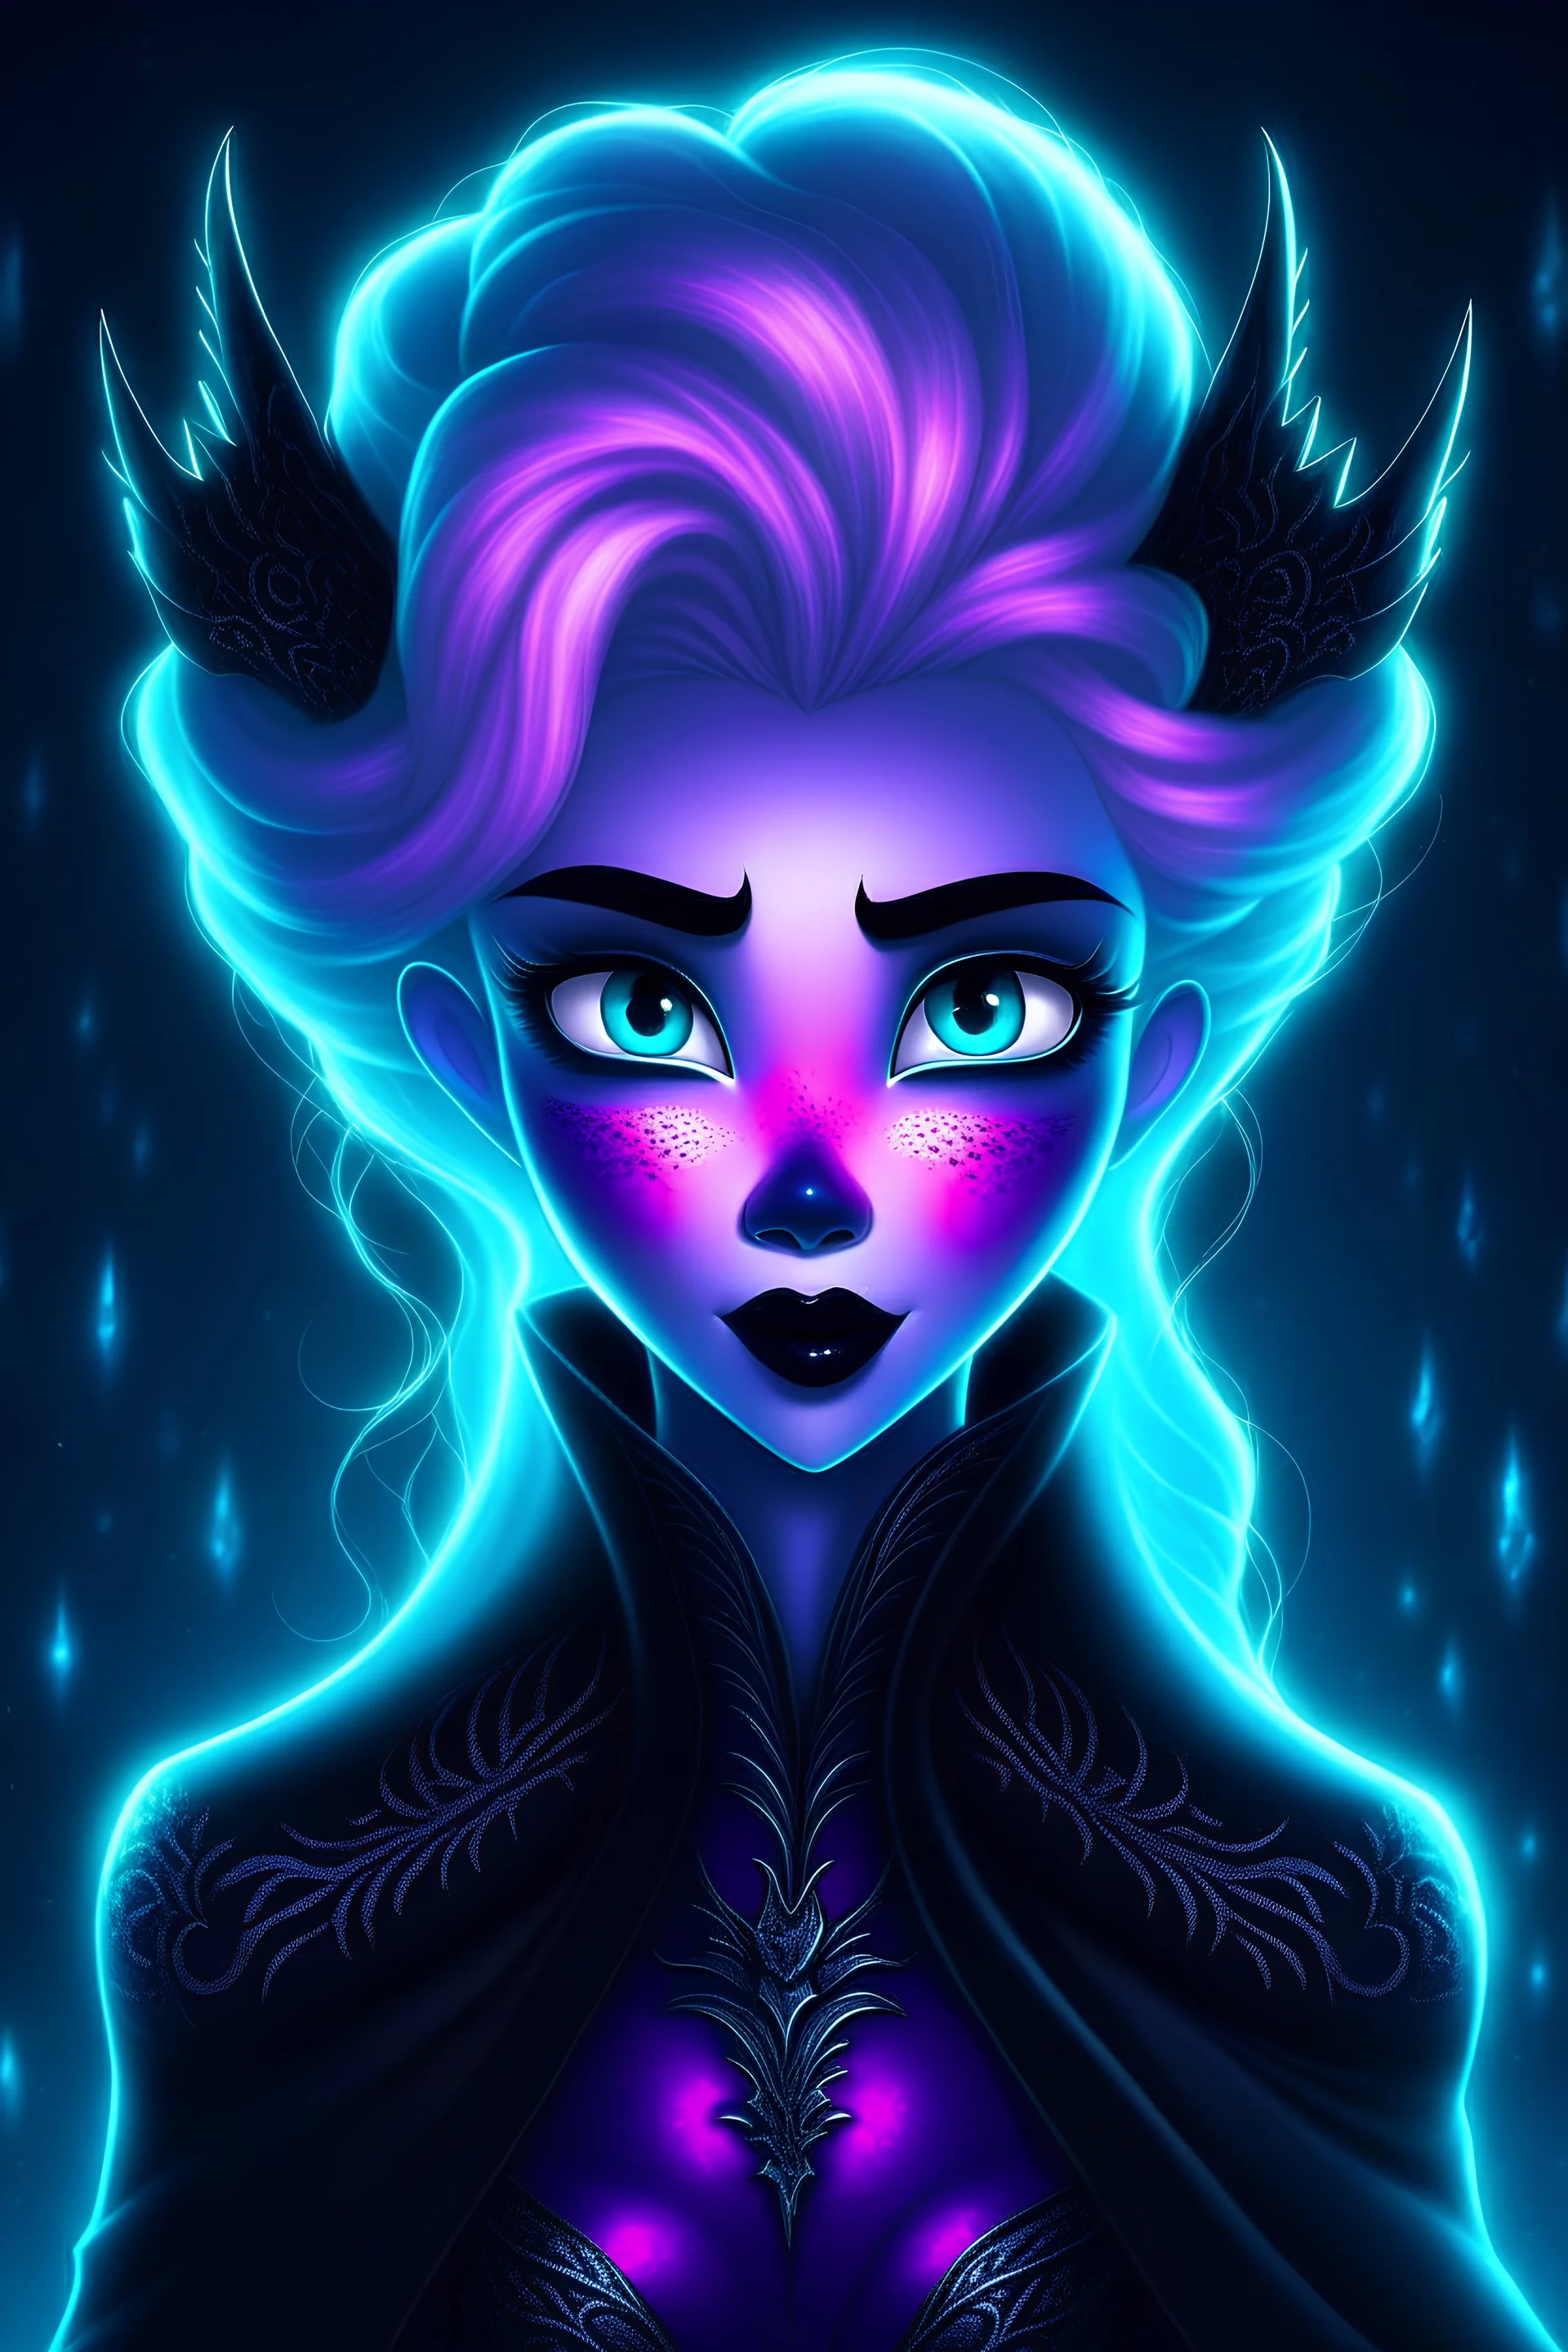 disney Elsa as evil darkness